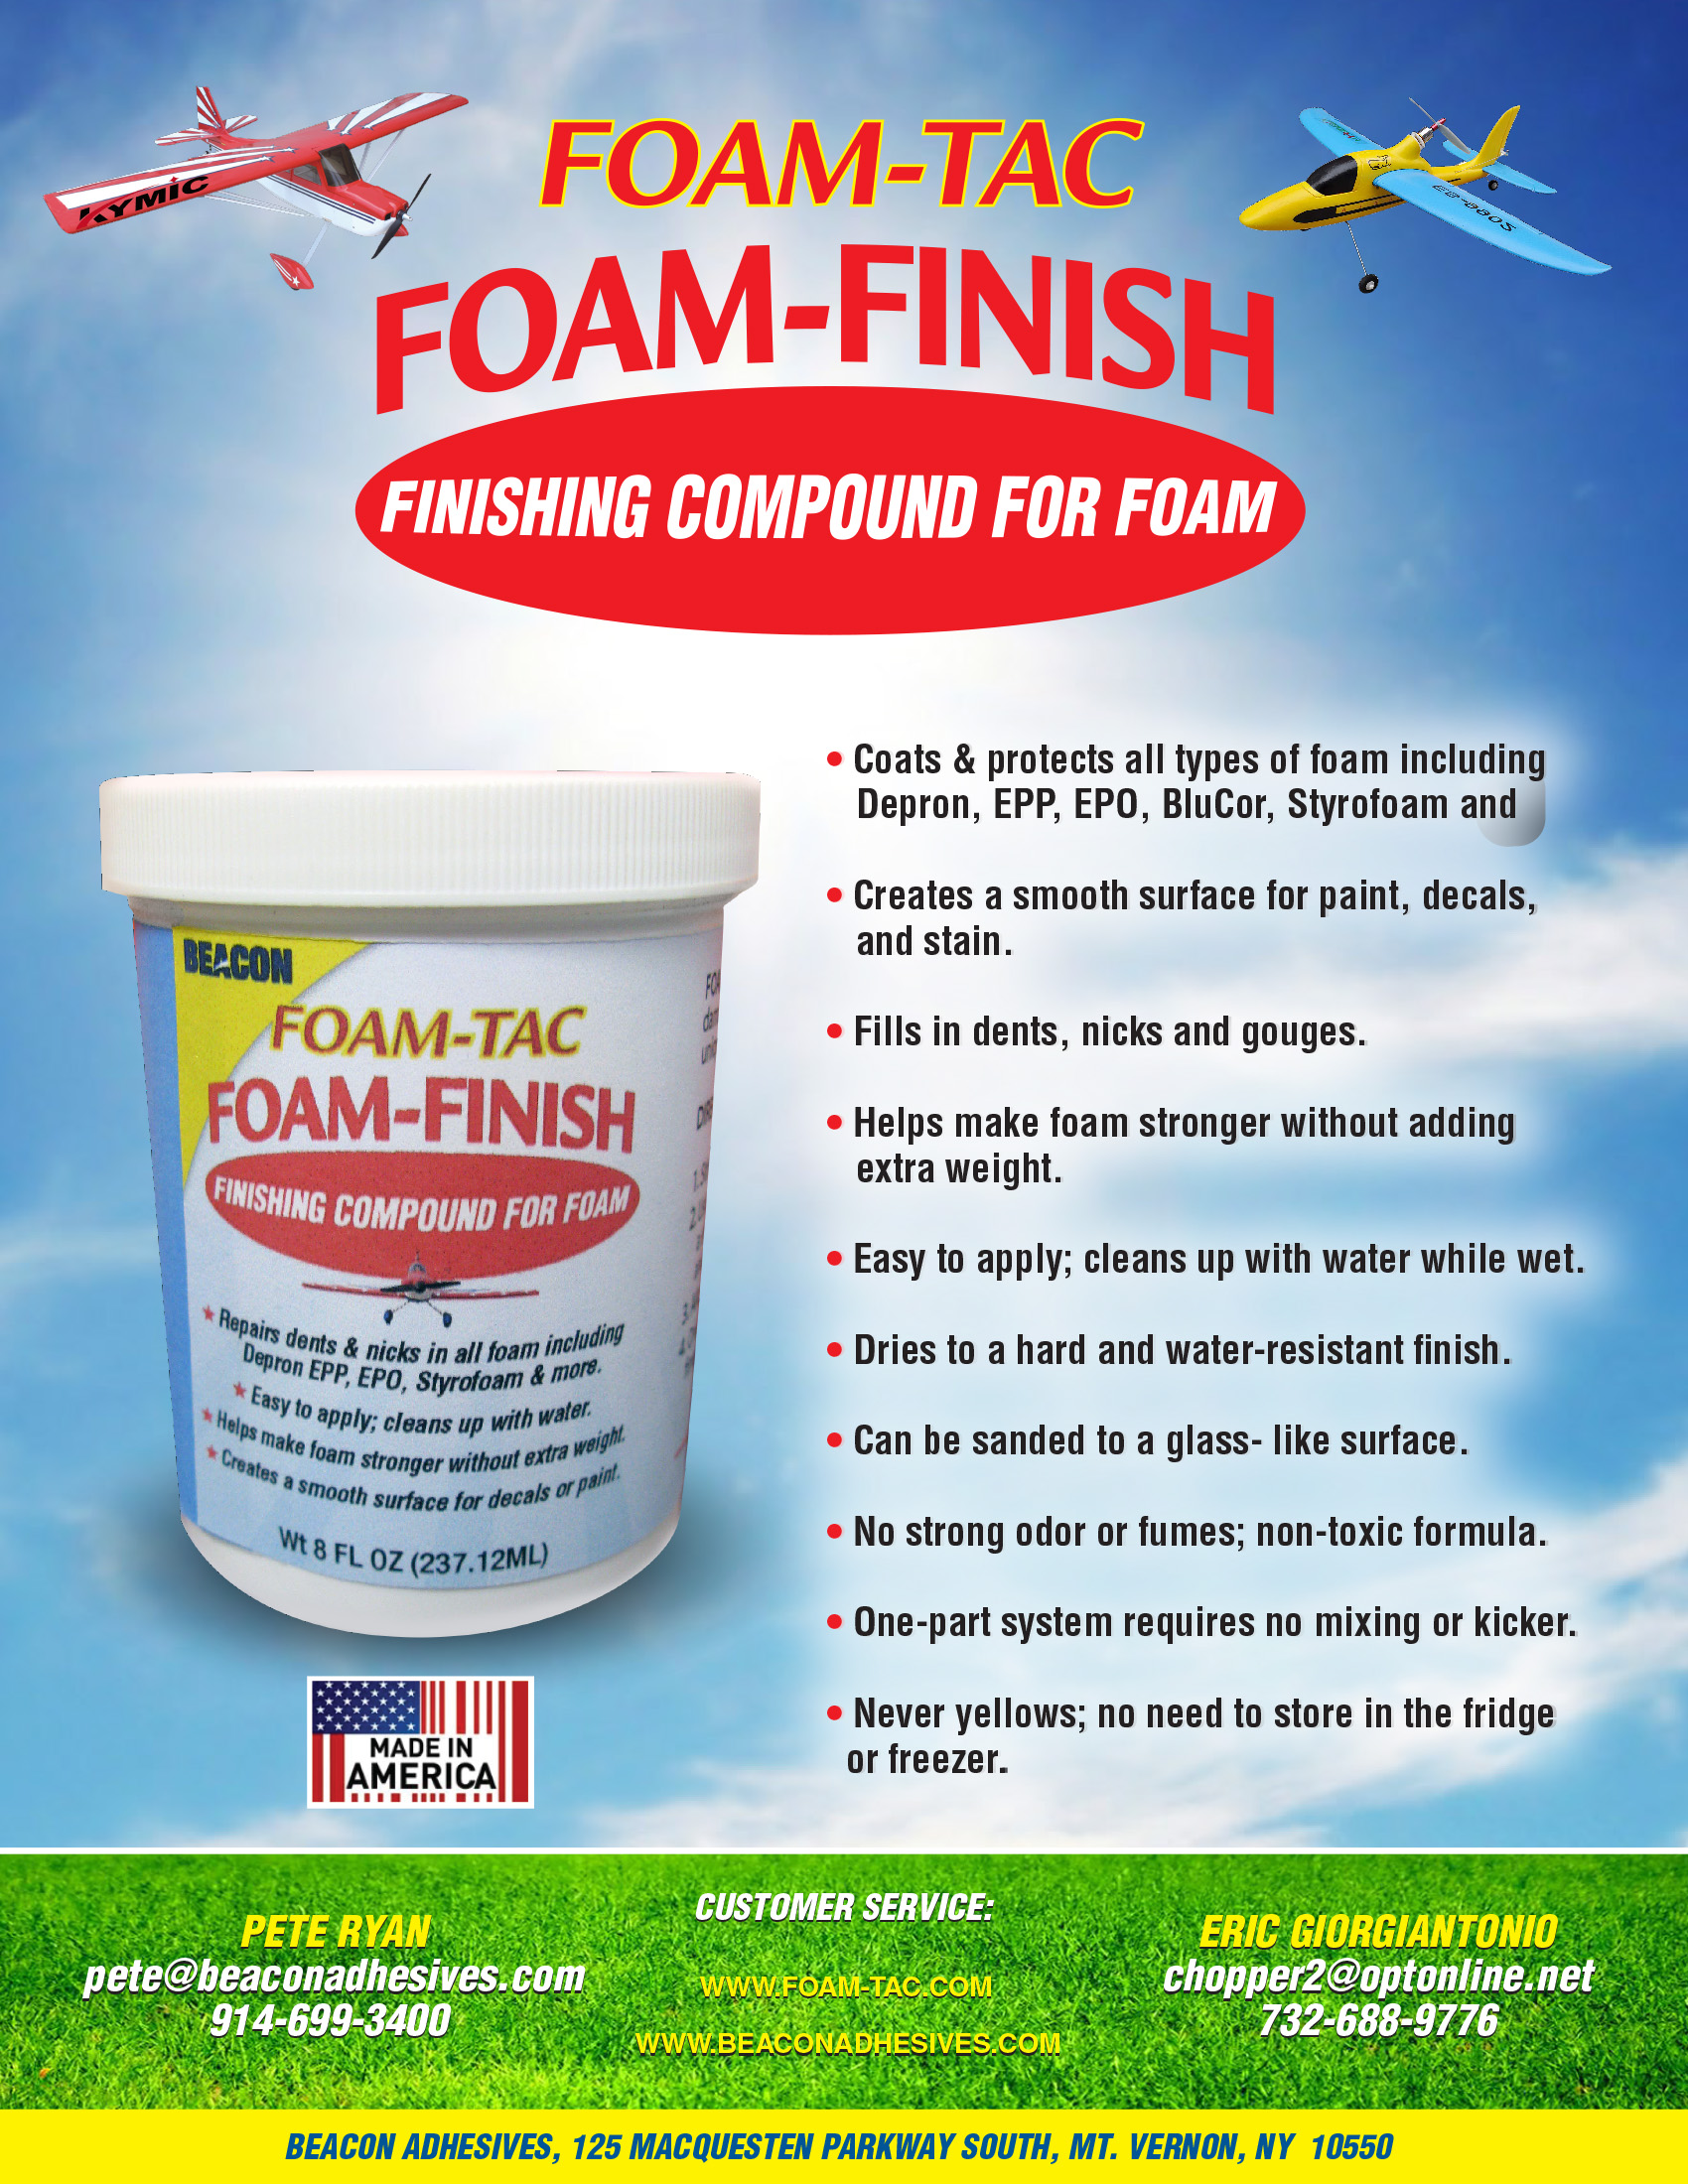  BEACON Foam-Tac Powerful Glue - Fast-Drying